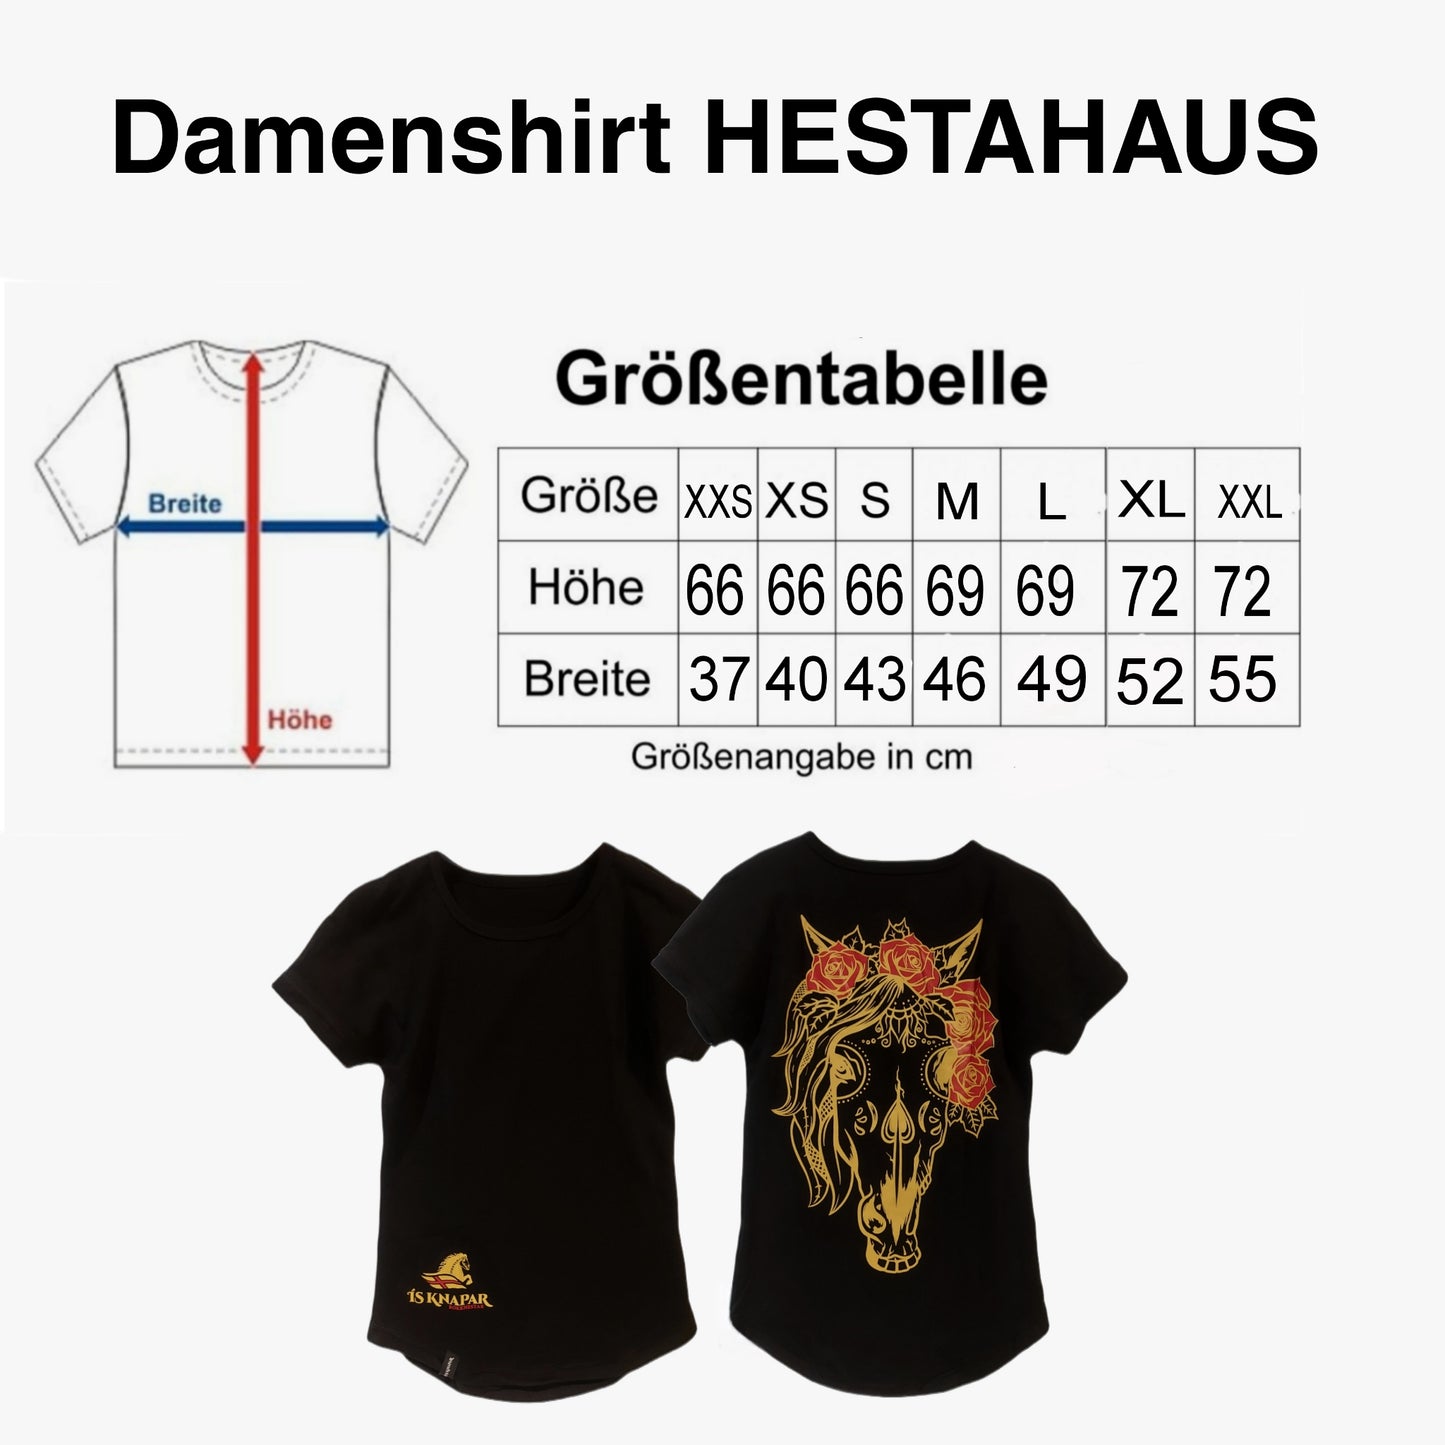 IsKnapar - HESTAHAUS - ein Damenshirt im Rock-Metal-Design ROKKHESTAR